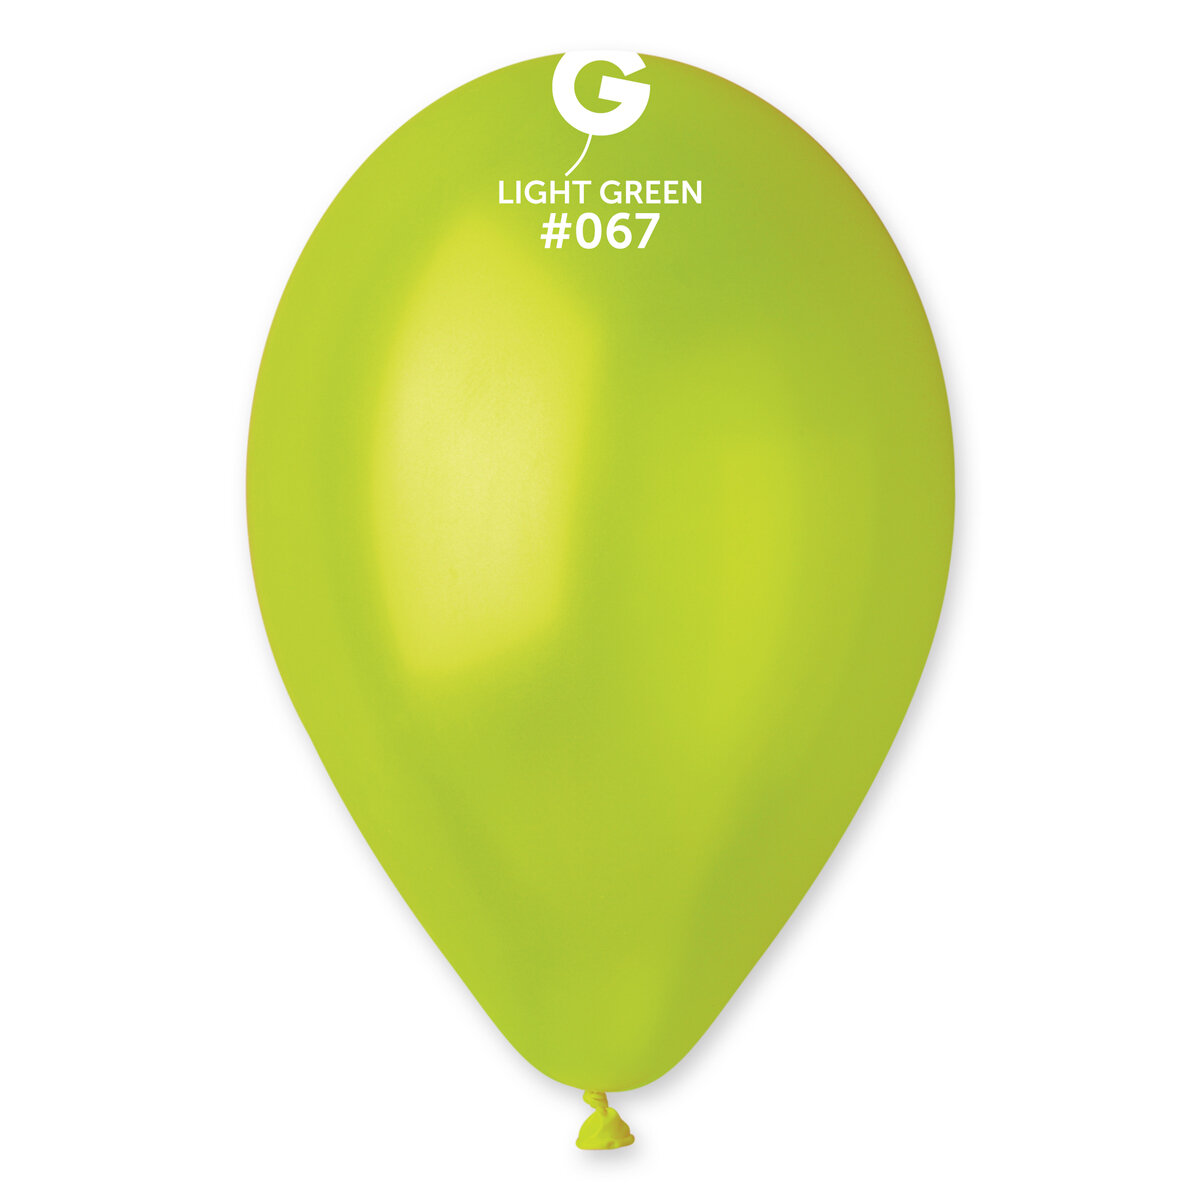 GM110: #067 Metal Light Green 116700 Metallic Color 12 in